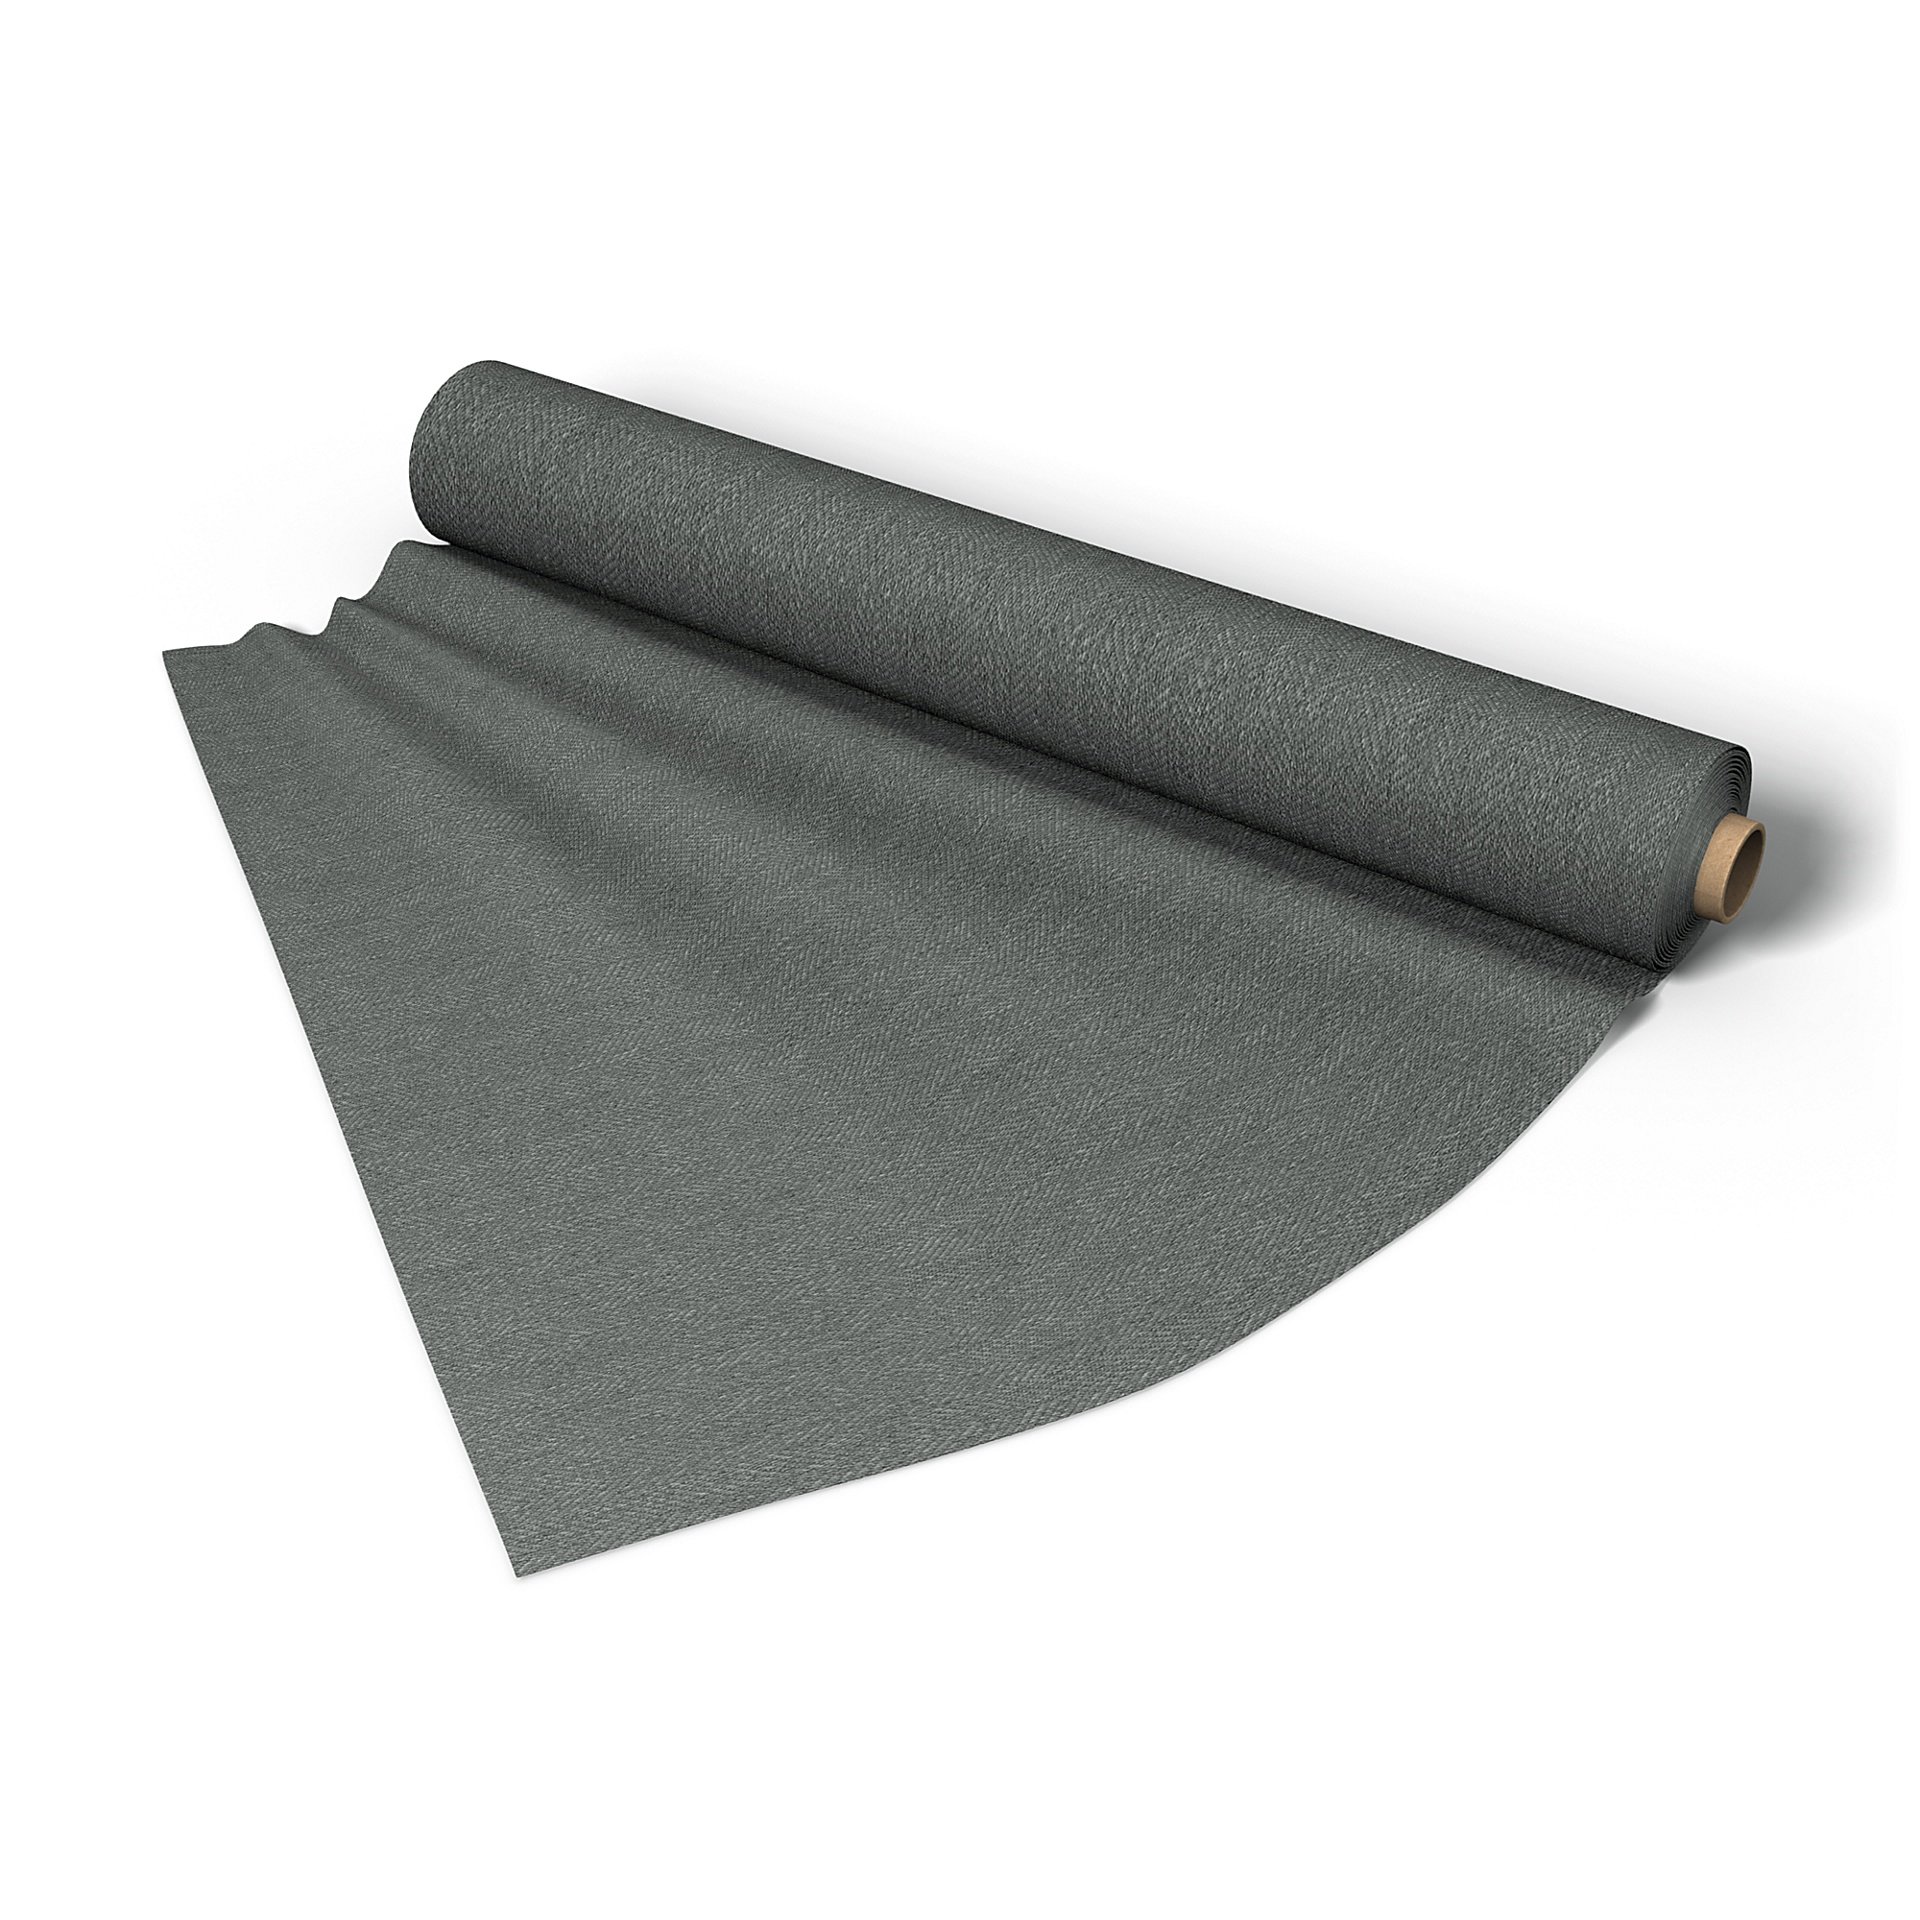 Fabric per metre, Laurel, Boucle & Texture - Bemz